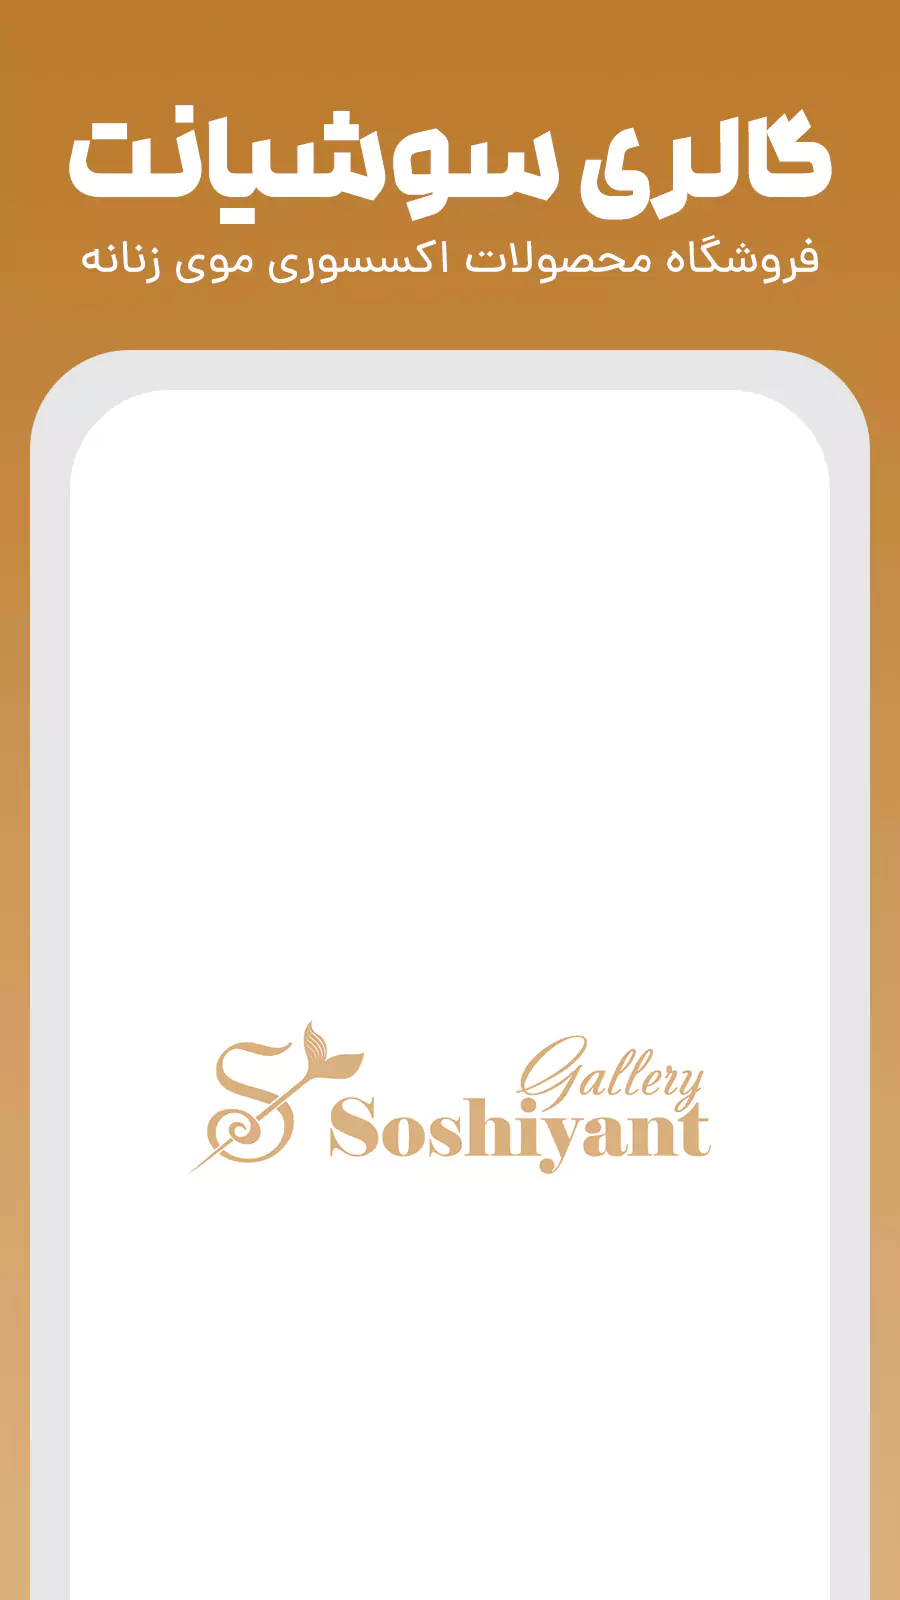 gallery-soshiyant-app2 (1)